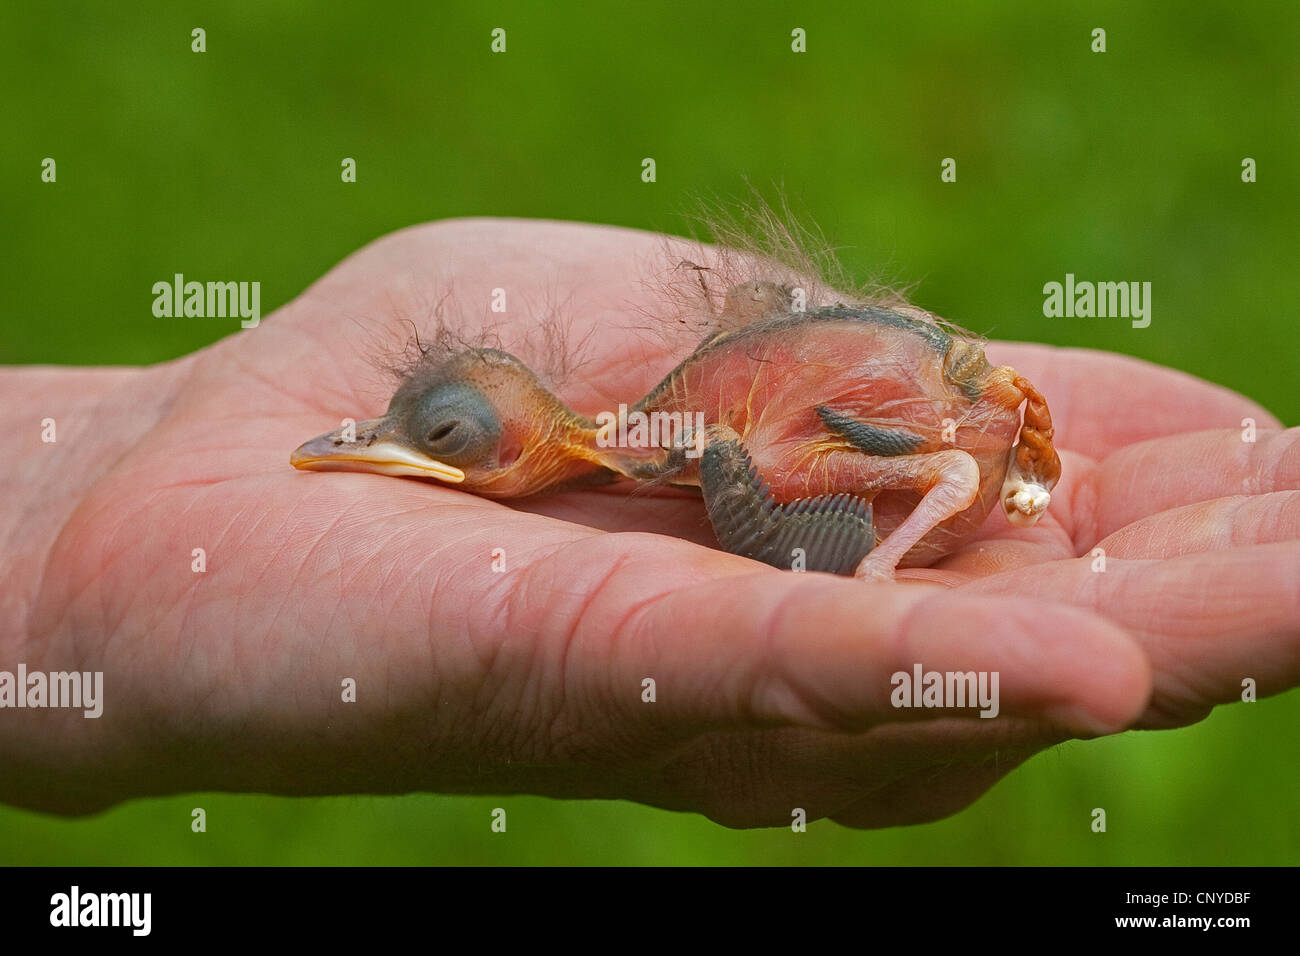 Merlo (Turdus merula), ancora calvo pollo orfani è giacente in una mano sleeping Foto Stock